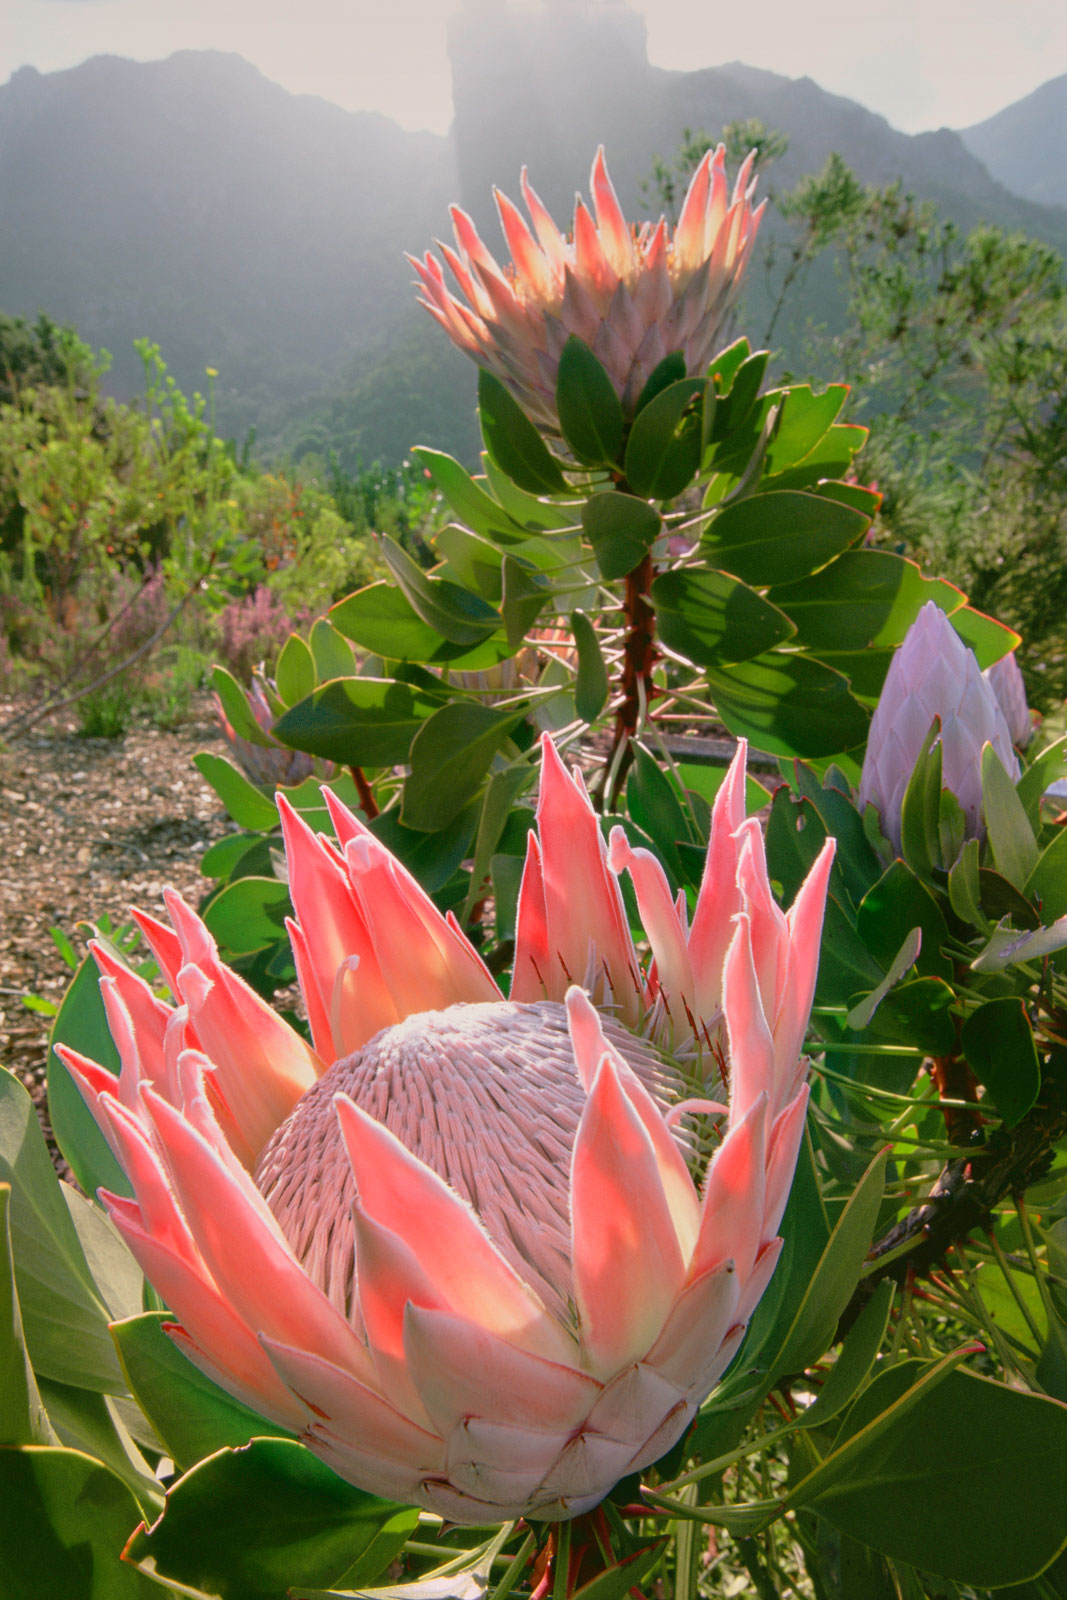 King protea, Kirstenbosch National Botanical Garden, Cape Town, South Africa